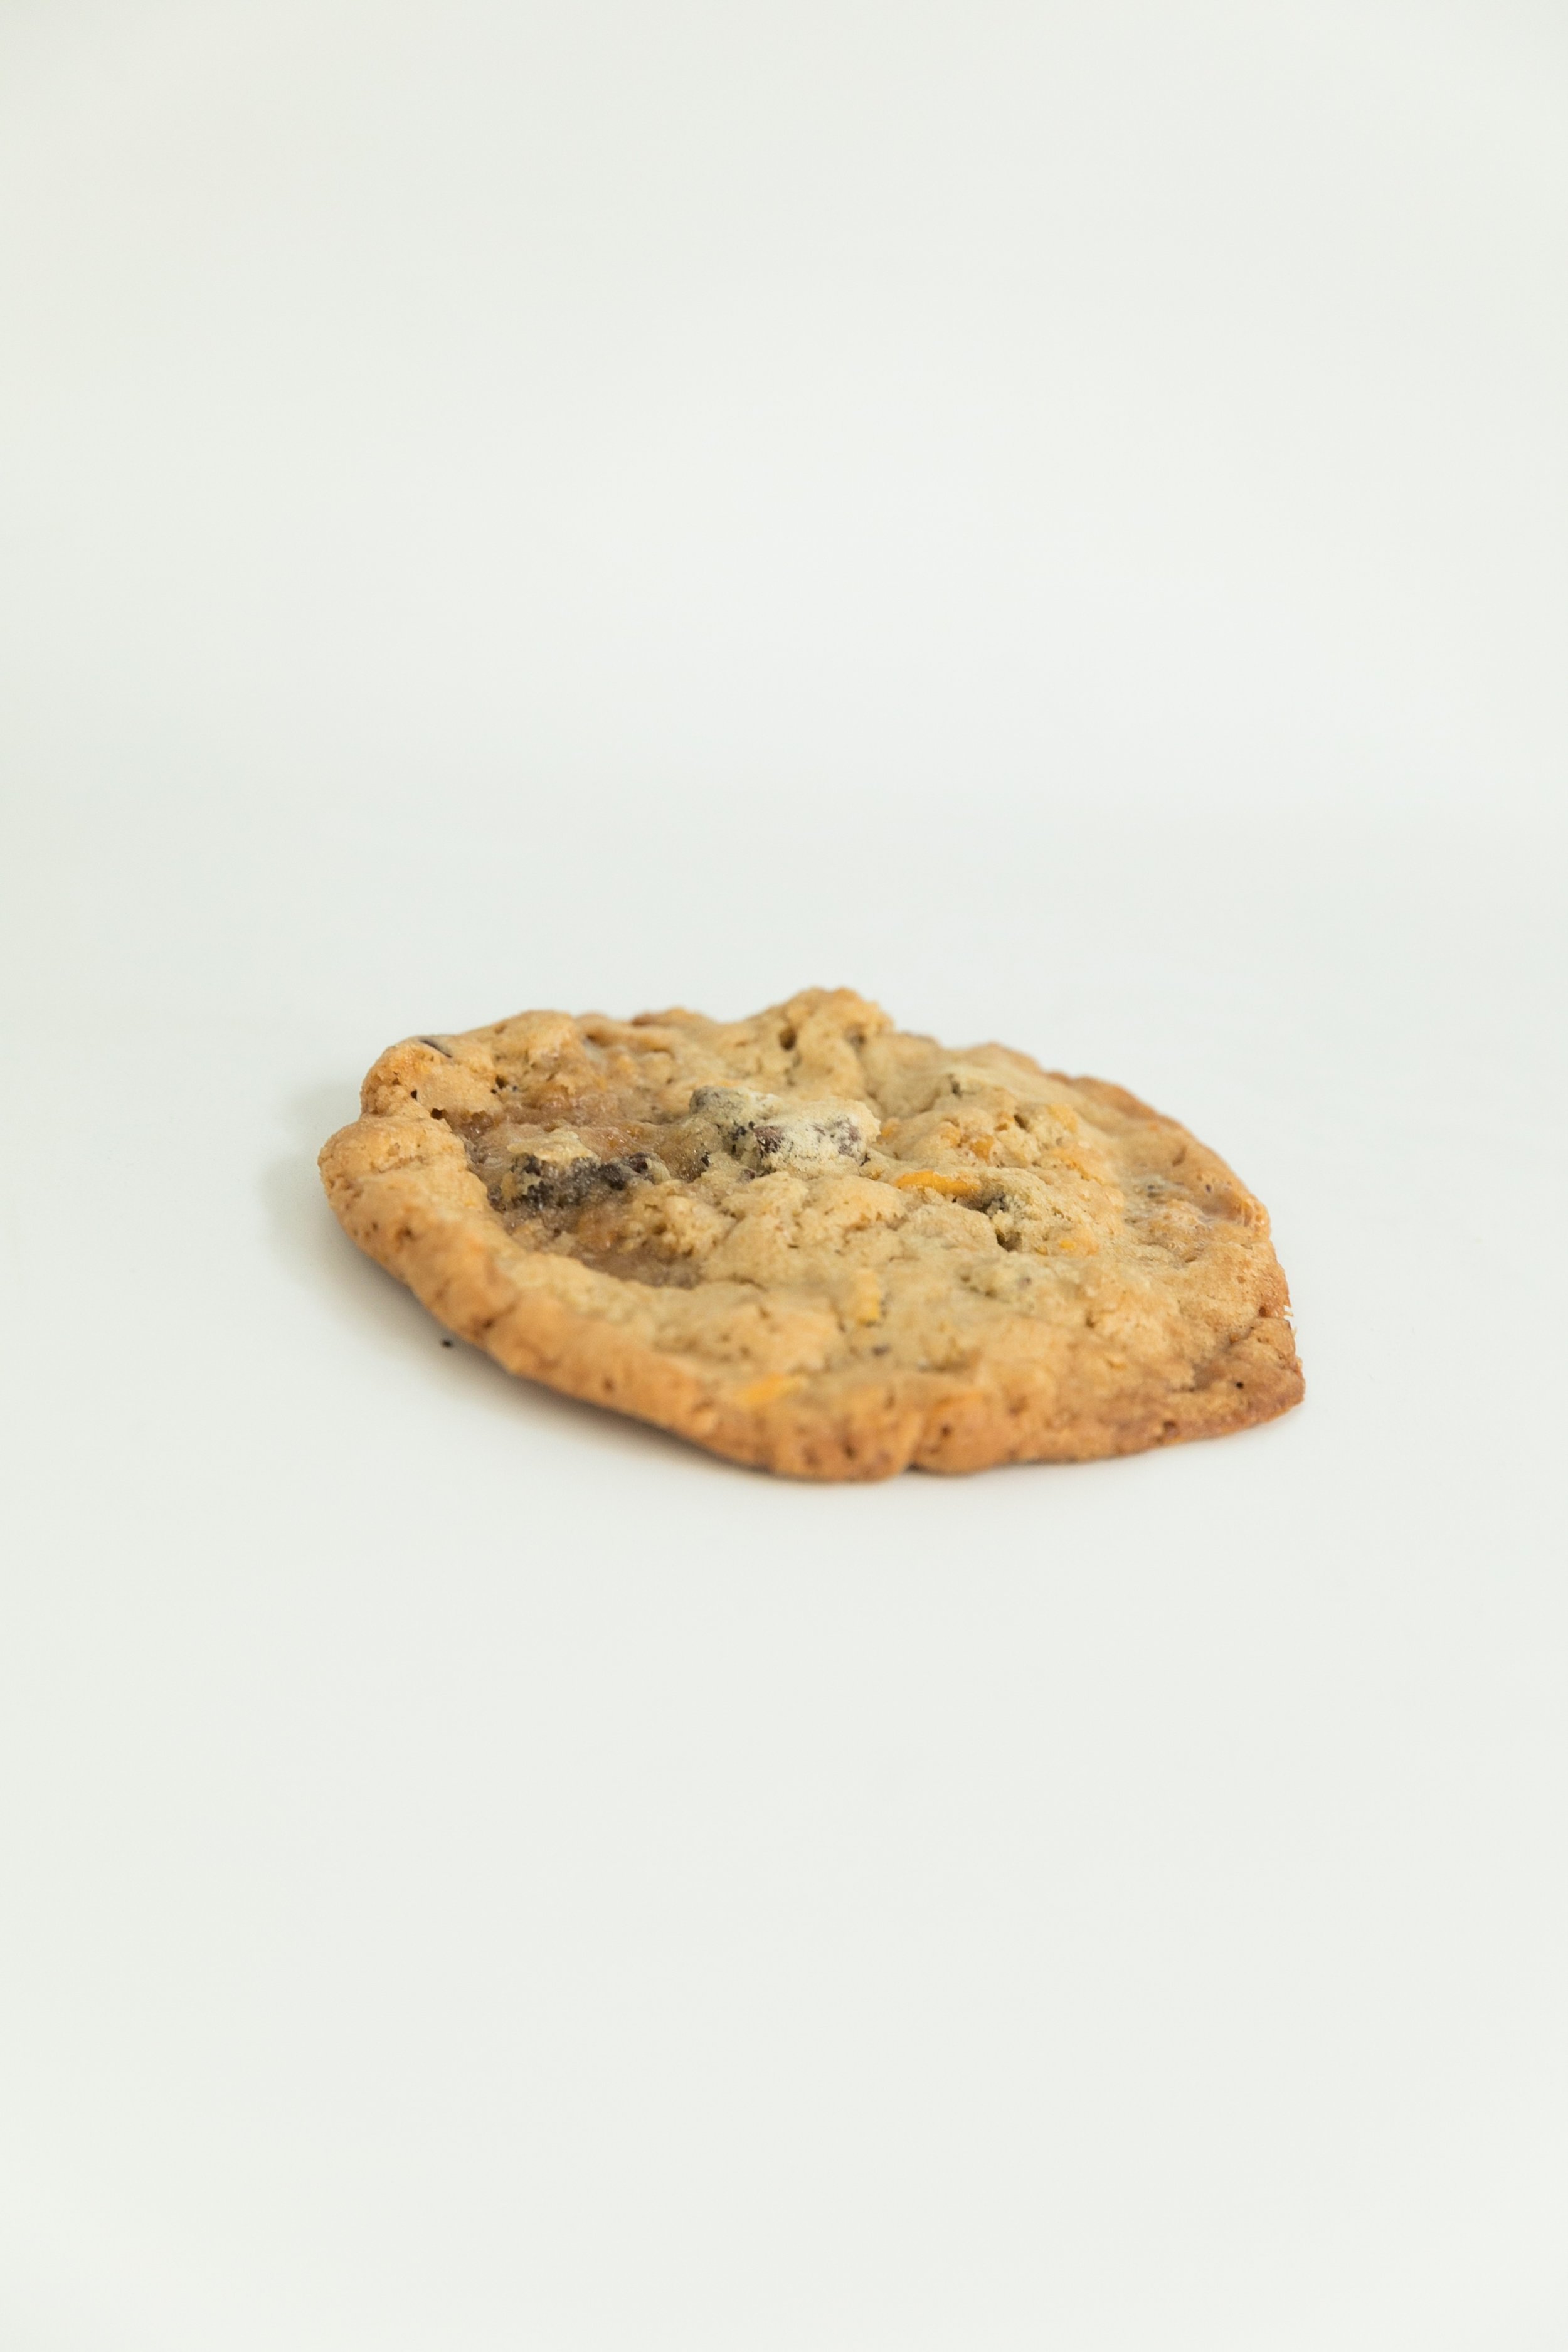  chocolate chip cookie with chocolate chunks  